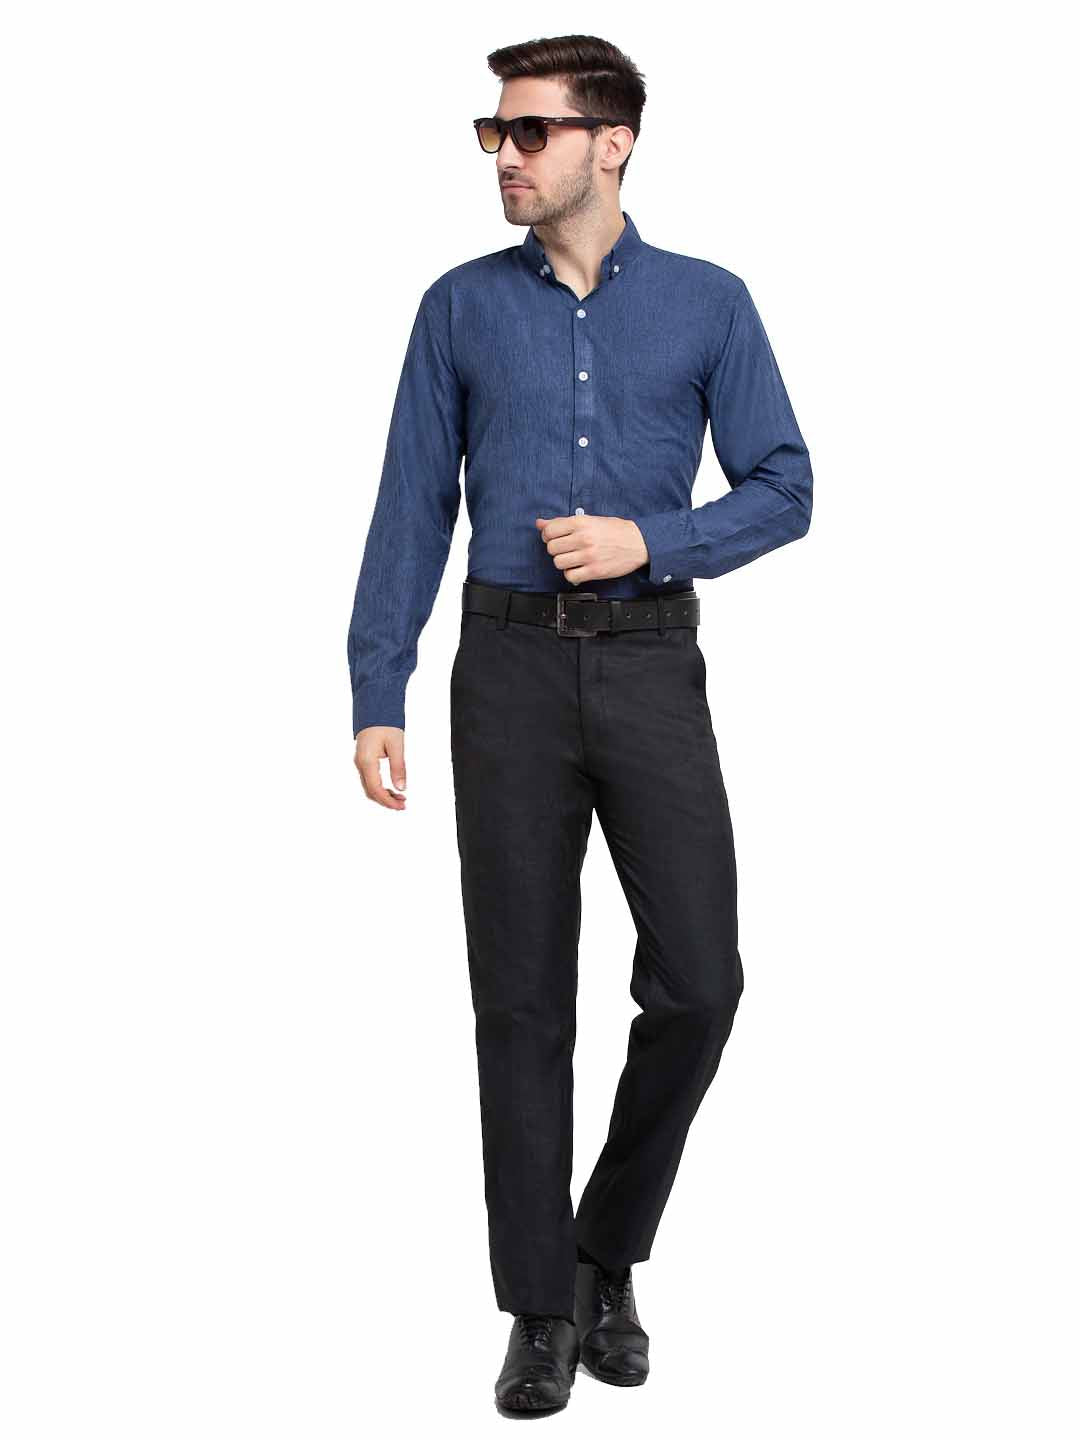 Men's Teal Button Down Collar Cotton Formal Shirt ( SF 785Teal ) - Jainish